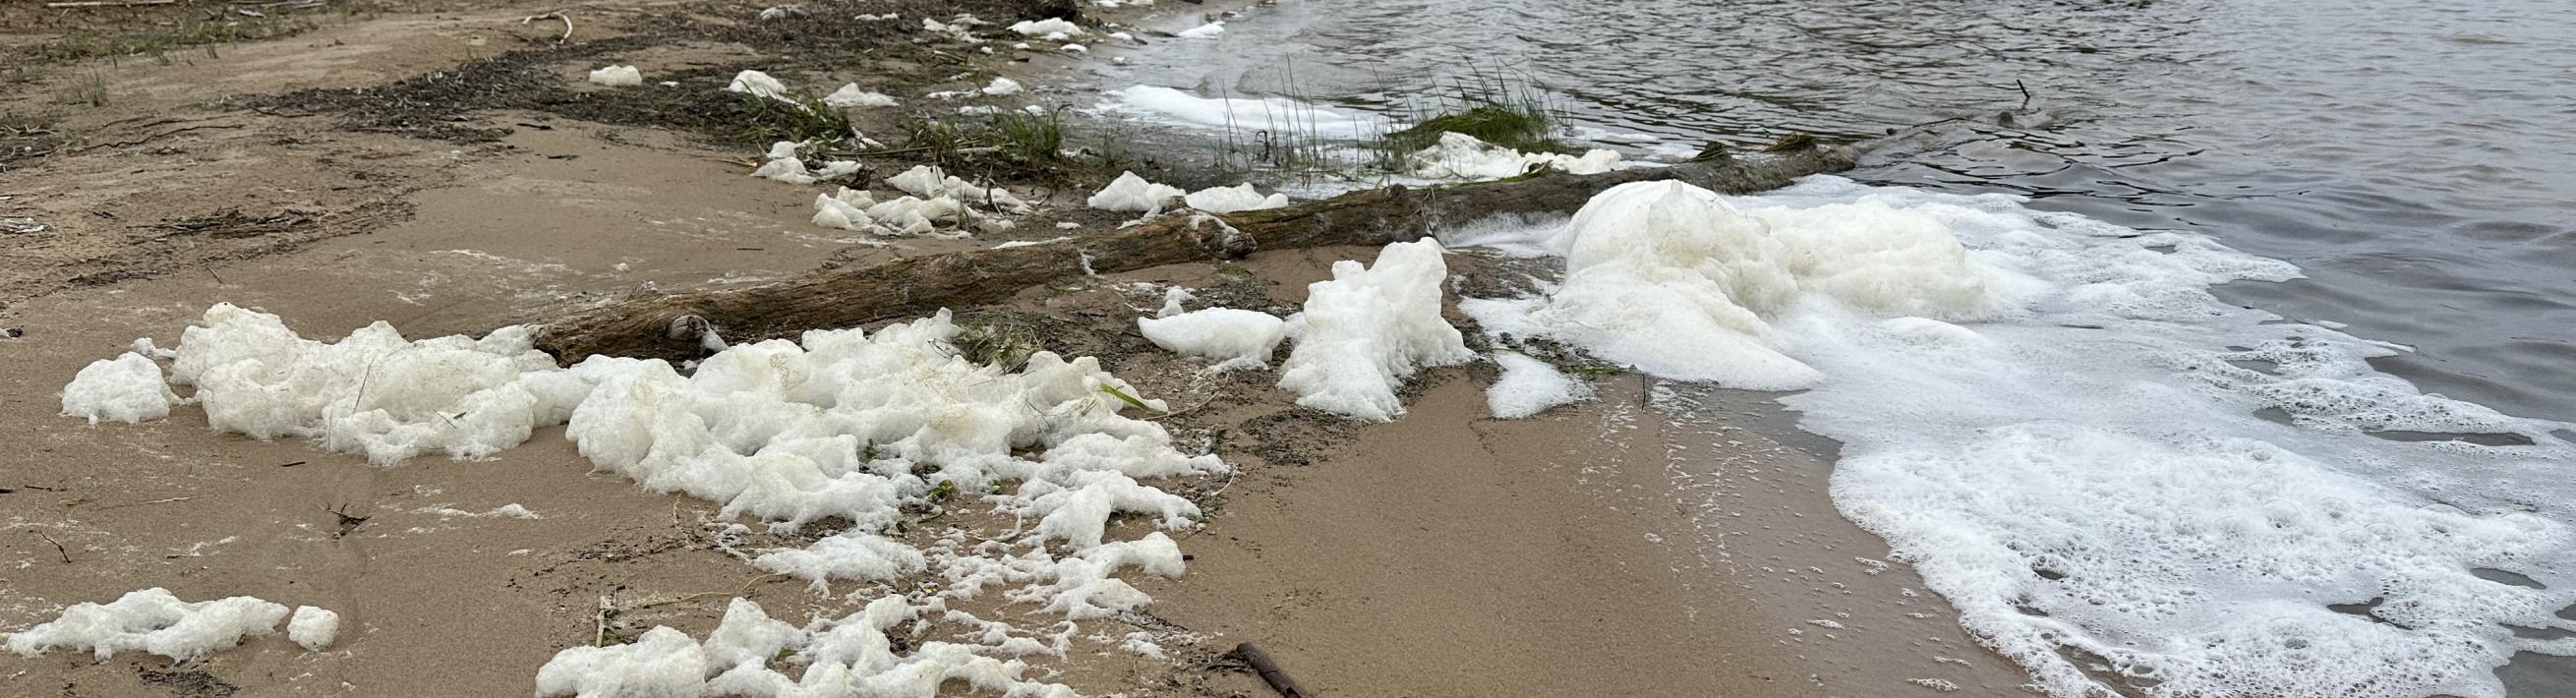 Foam on the shore of Lake Huron